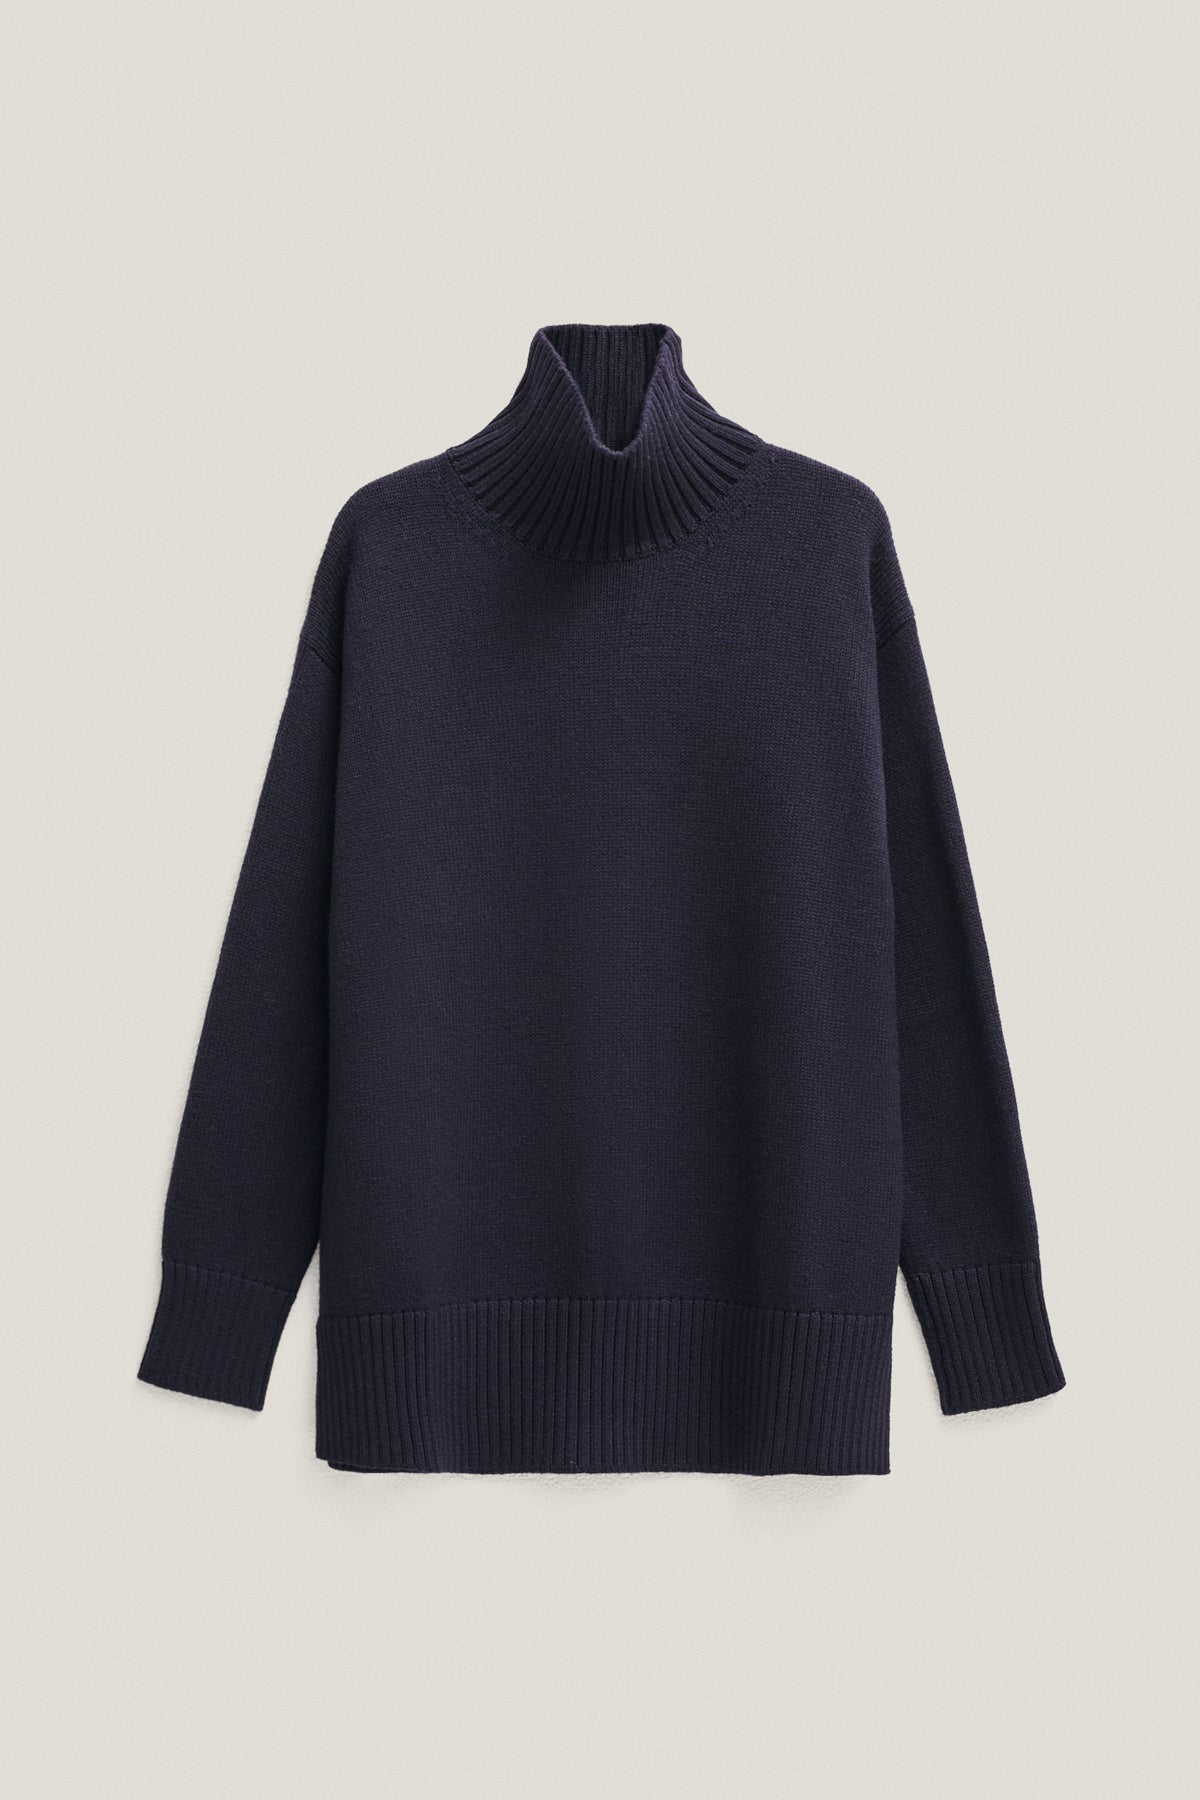 the merino wool oversize high neck oxford blue